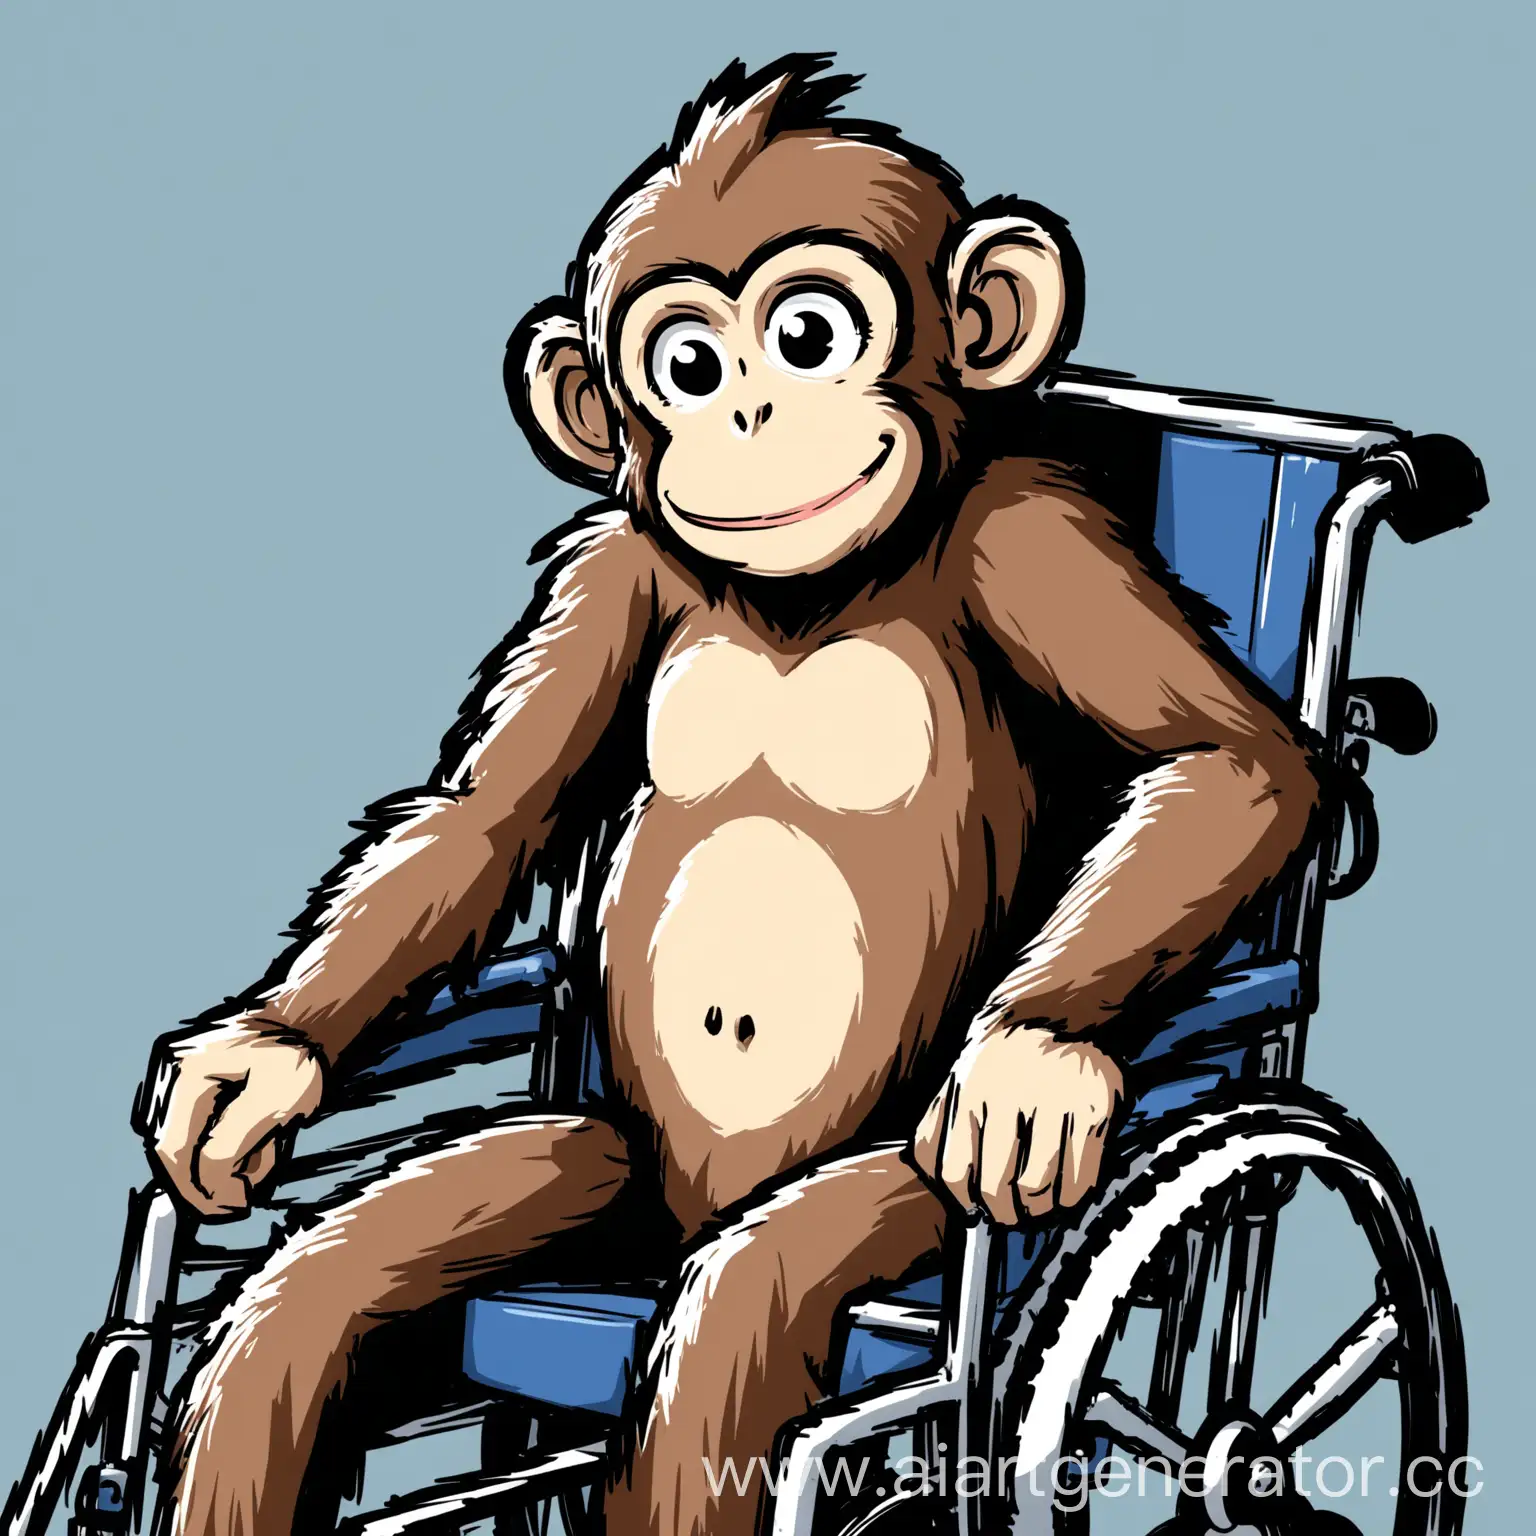 Cheerful-Monkey-in-Wheelchair-Playful-Comic-Illustration